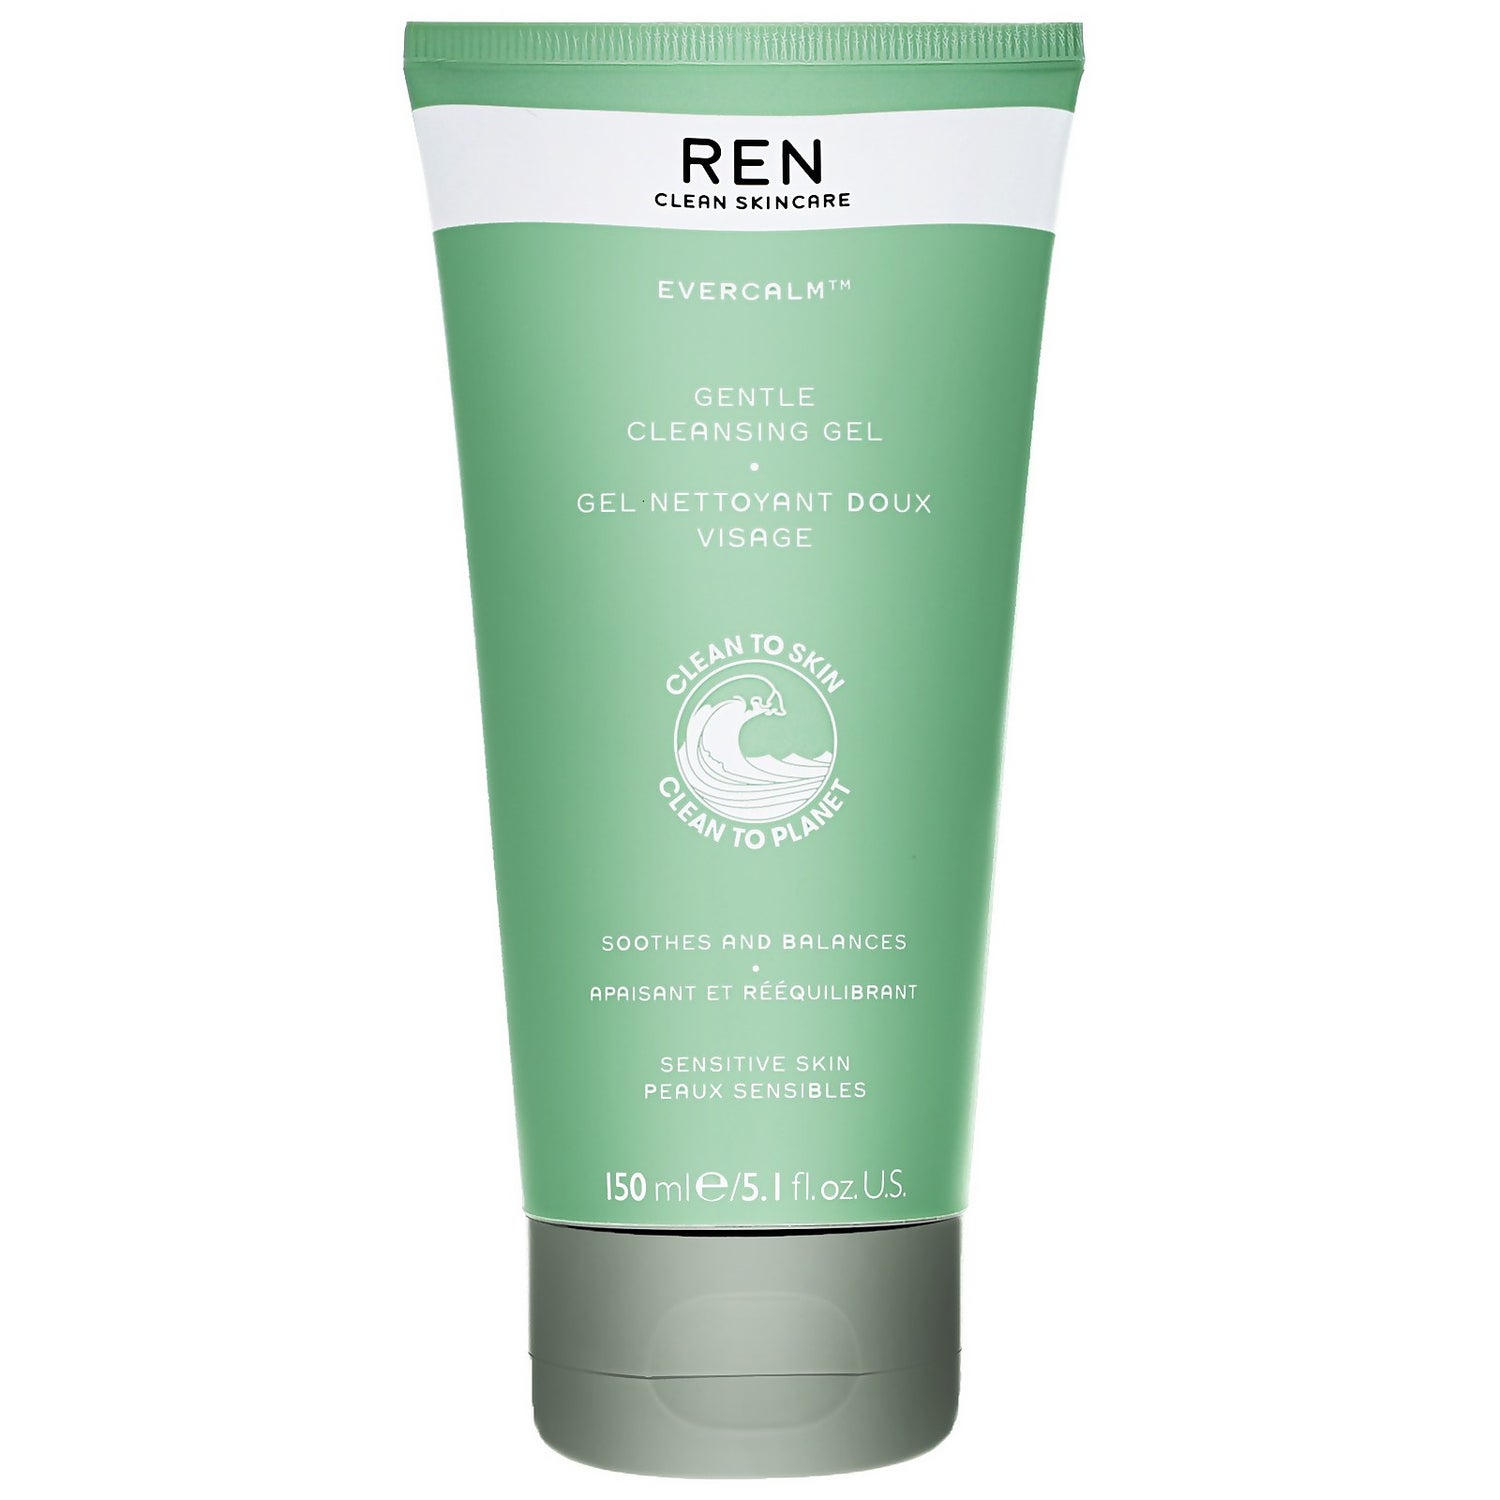 REN 5.1 Clean Cleansing Face Evercalm fl.oz. - / Gel Skincare Gentle allbeauty 150ml